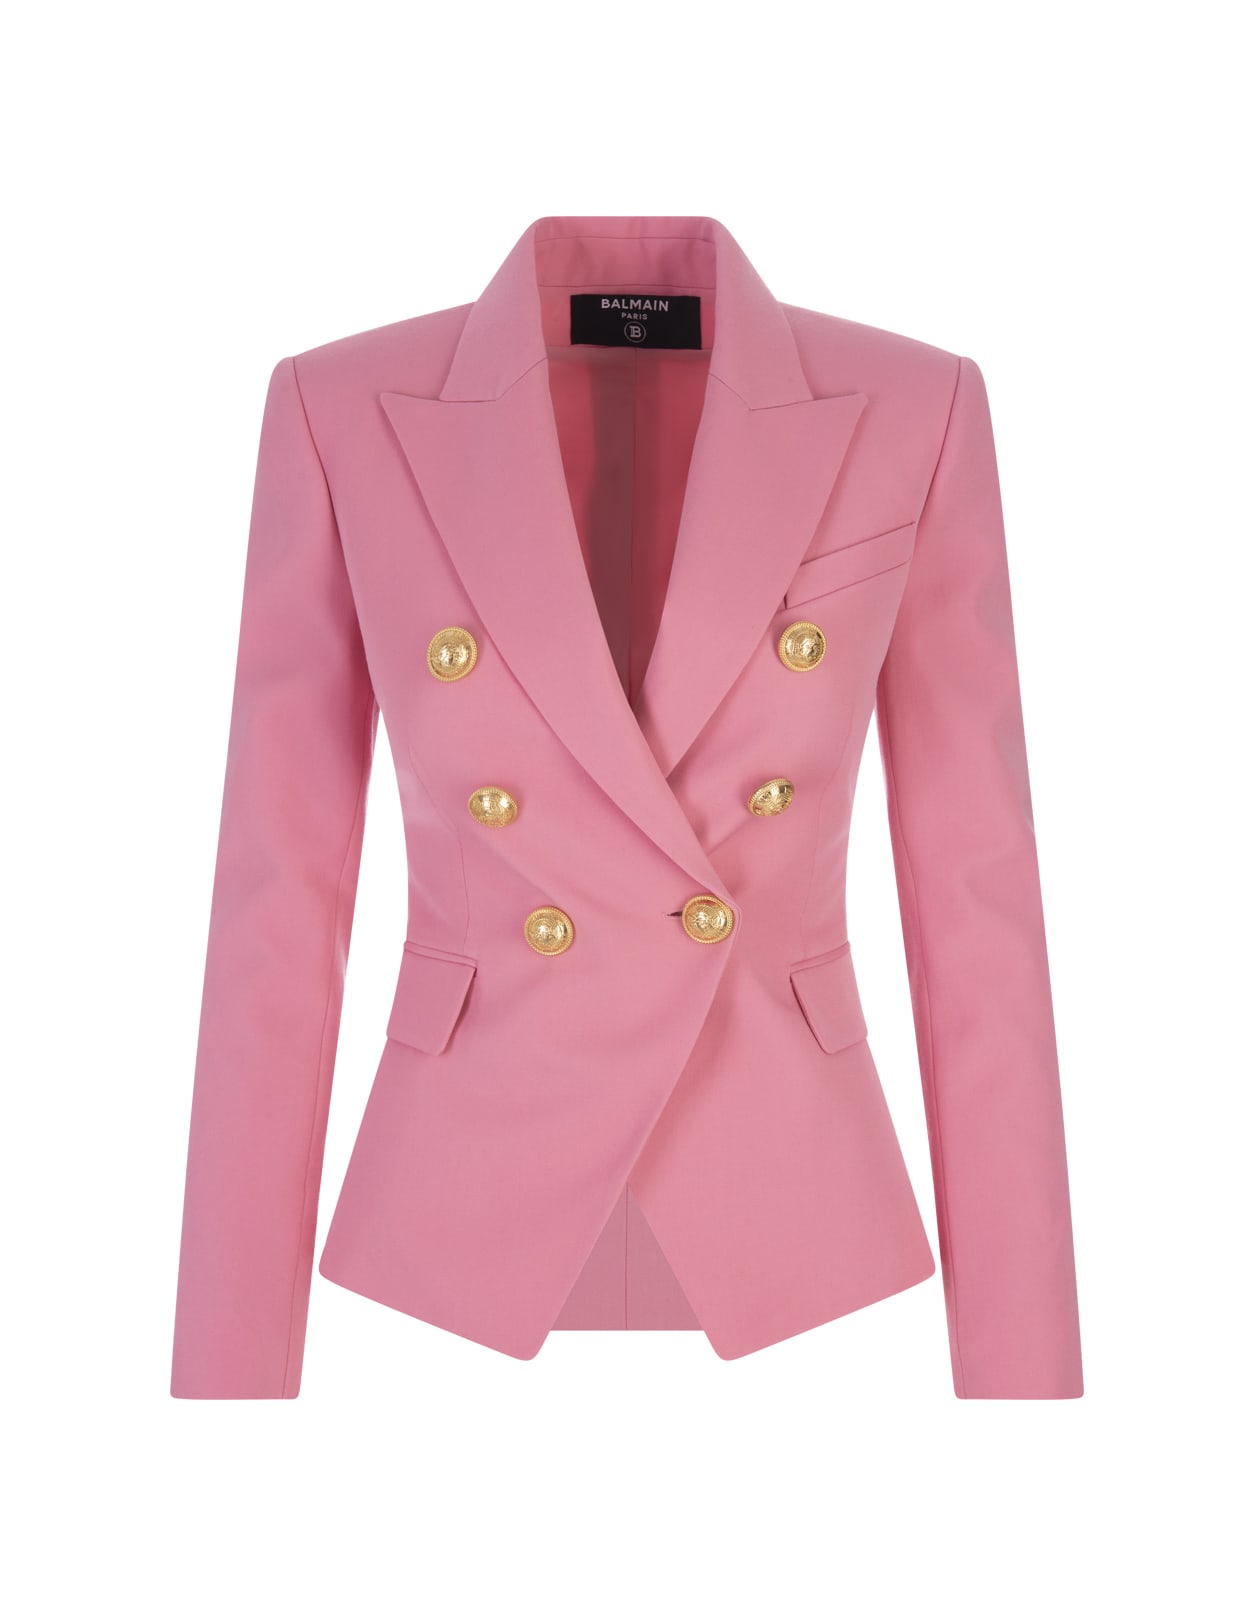 Balmain Pink Wool Double-Breasted Blazer